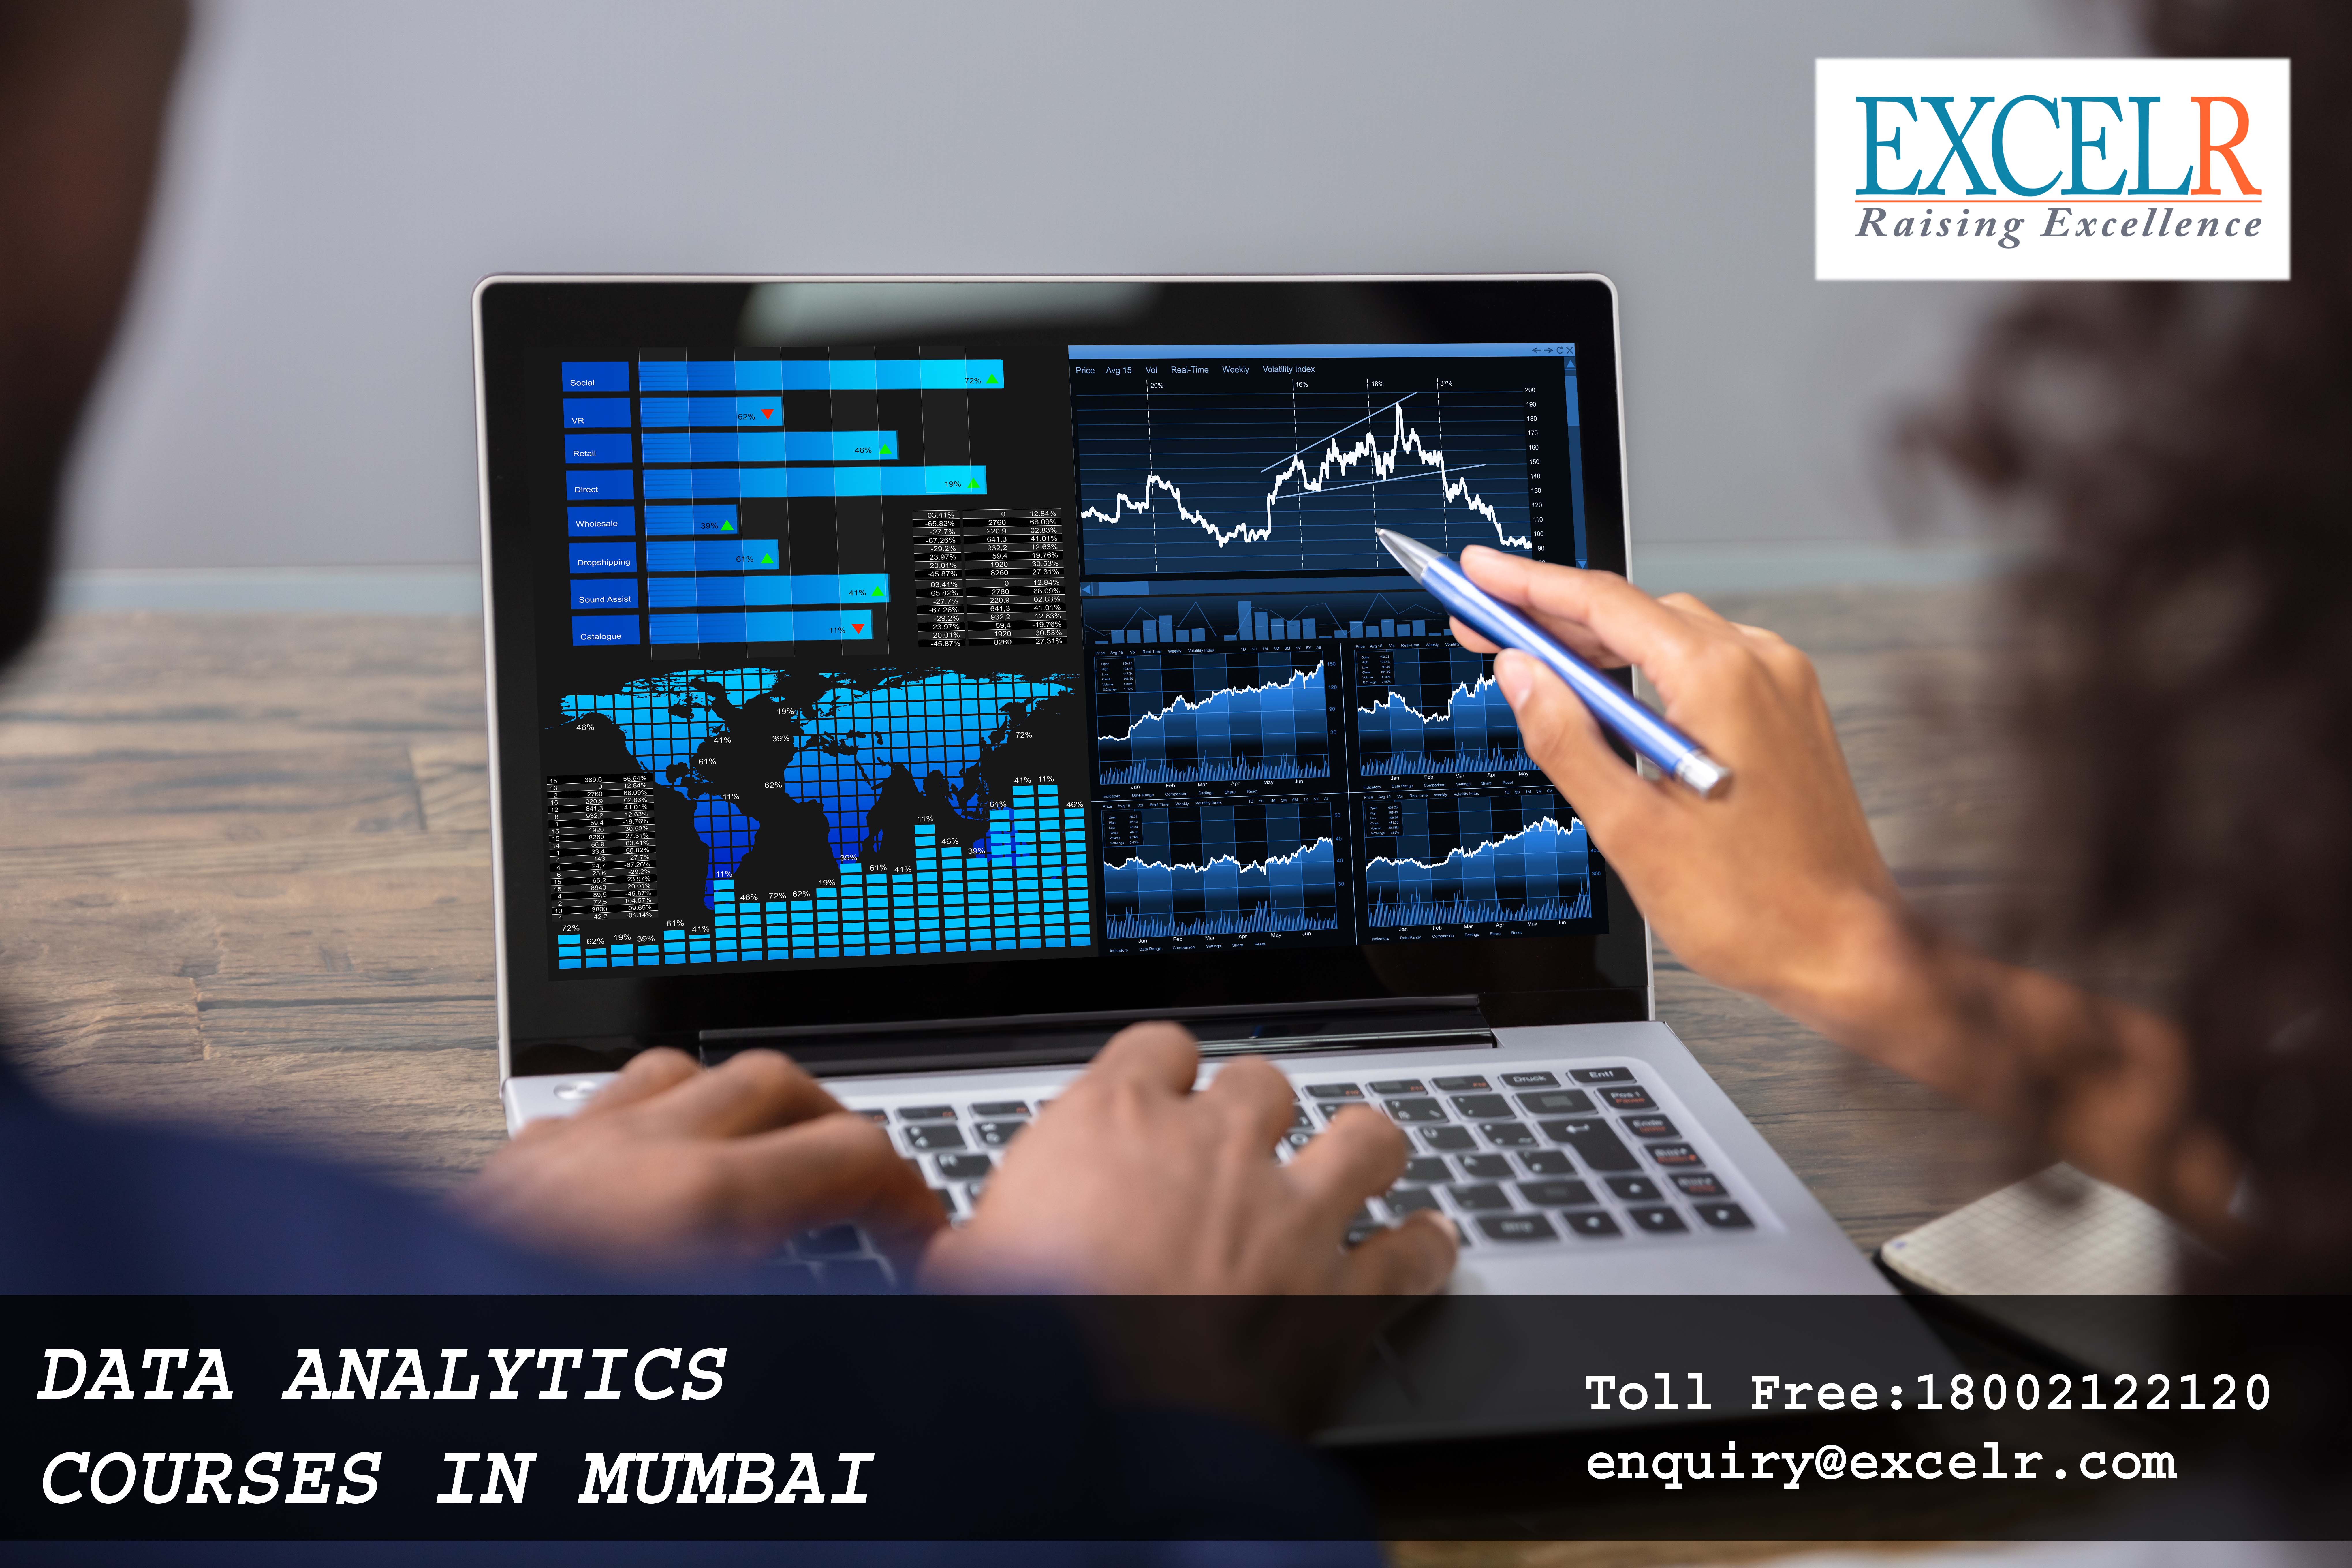 ExcelR, providing Data analytics training in Mumbai, Mumbai, Maharashtra, India